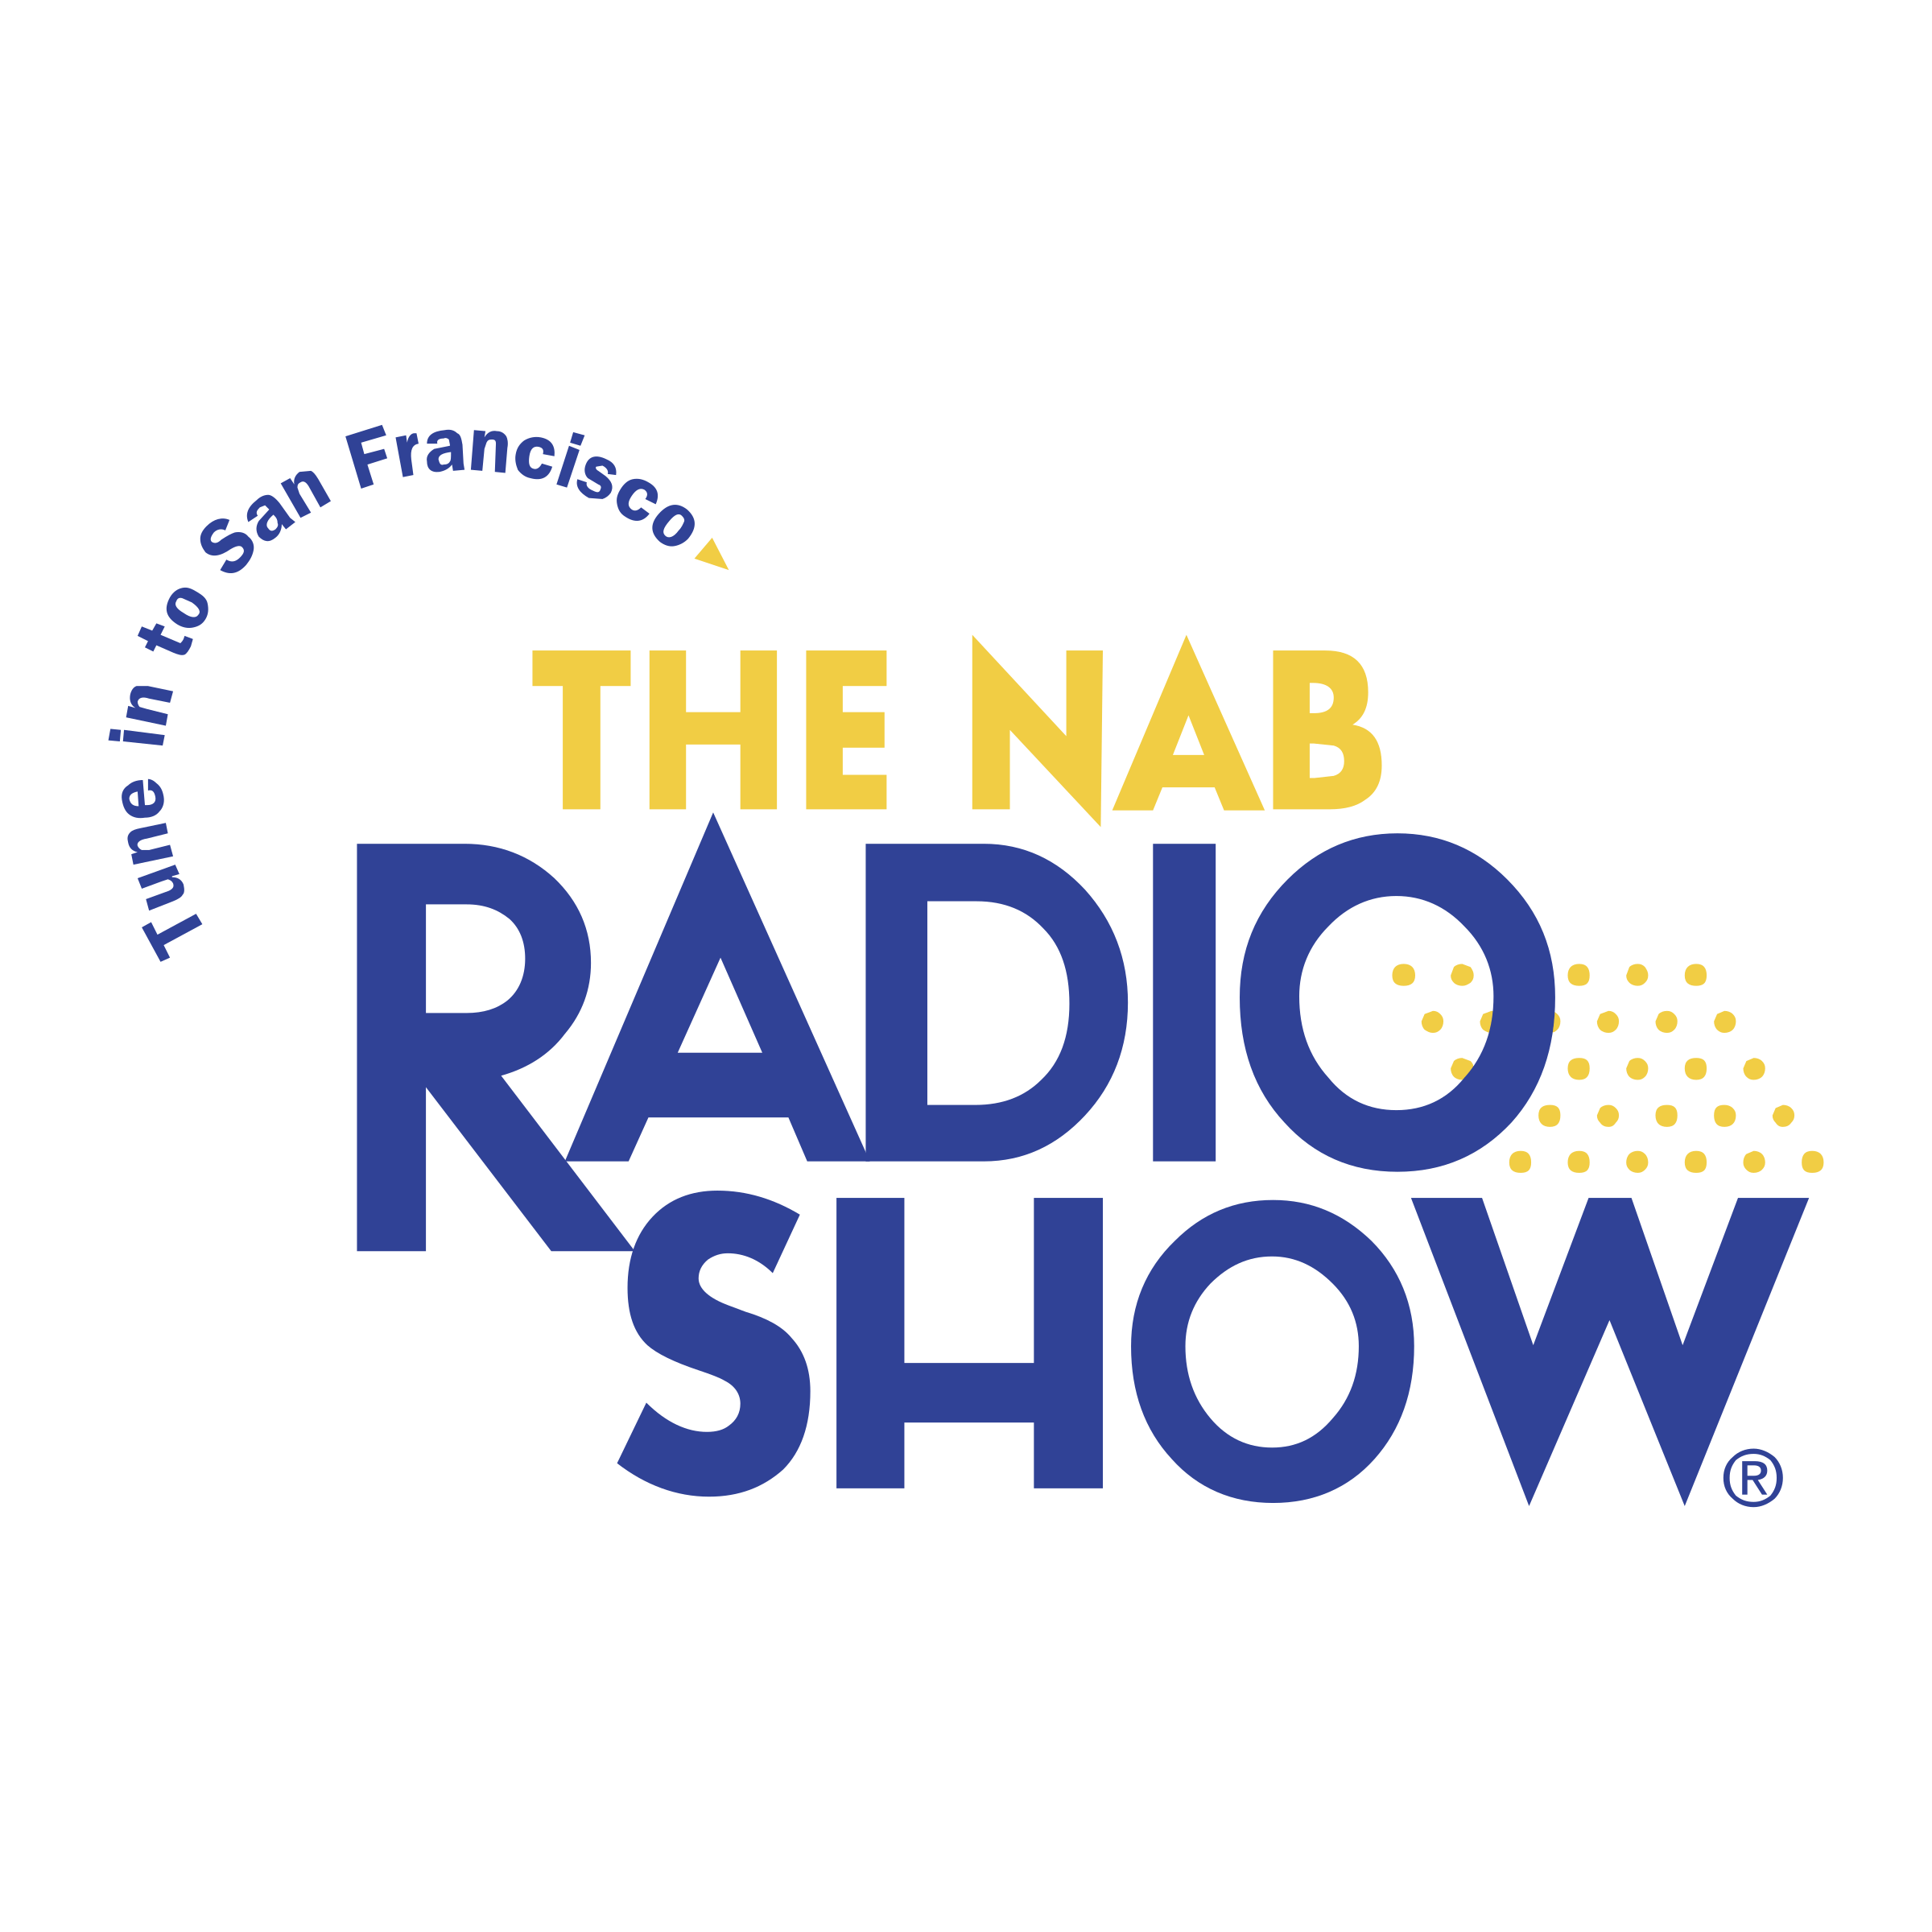 Radio Show Logo - The NAB Radio Show Logo PNG Transparent & SVG Vector - Freebie Supply